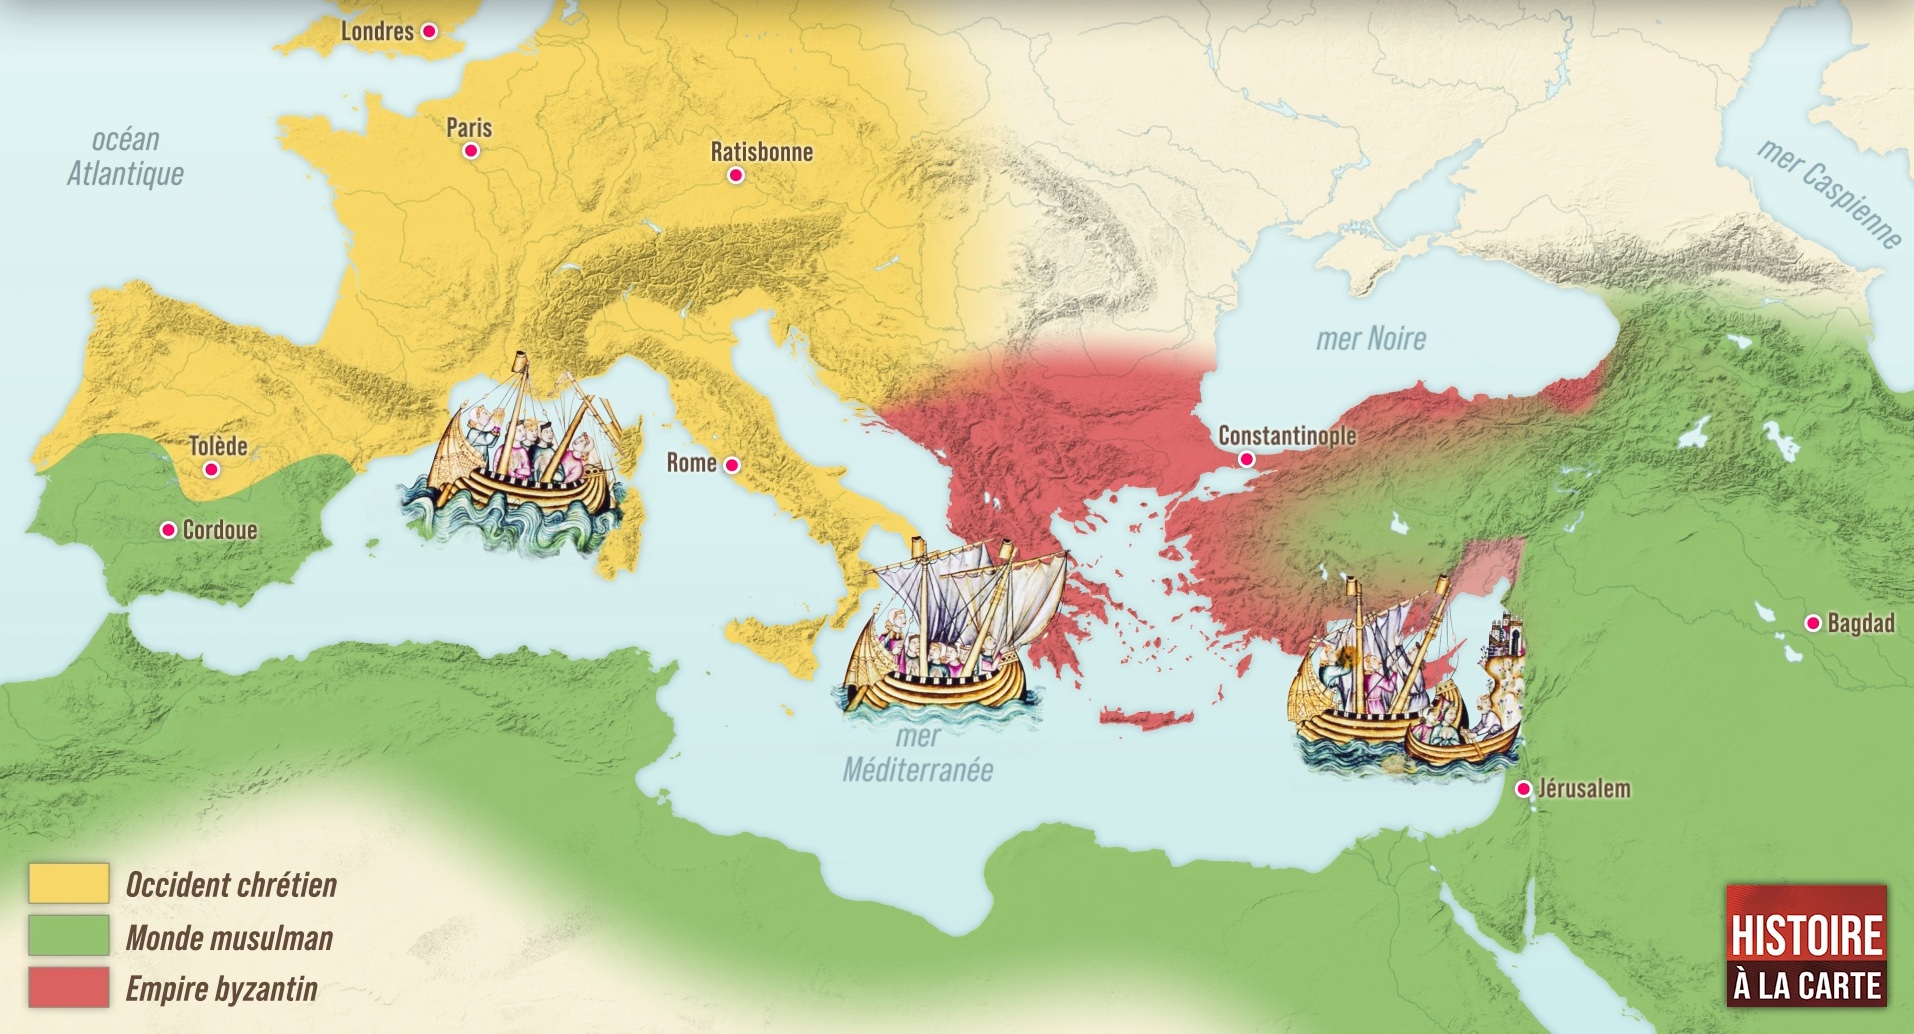 The Crusades and Mediterranean trade